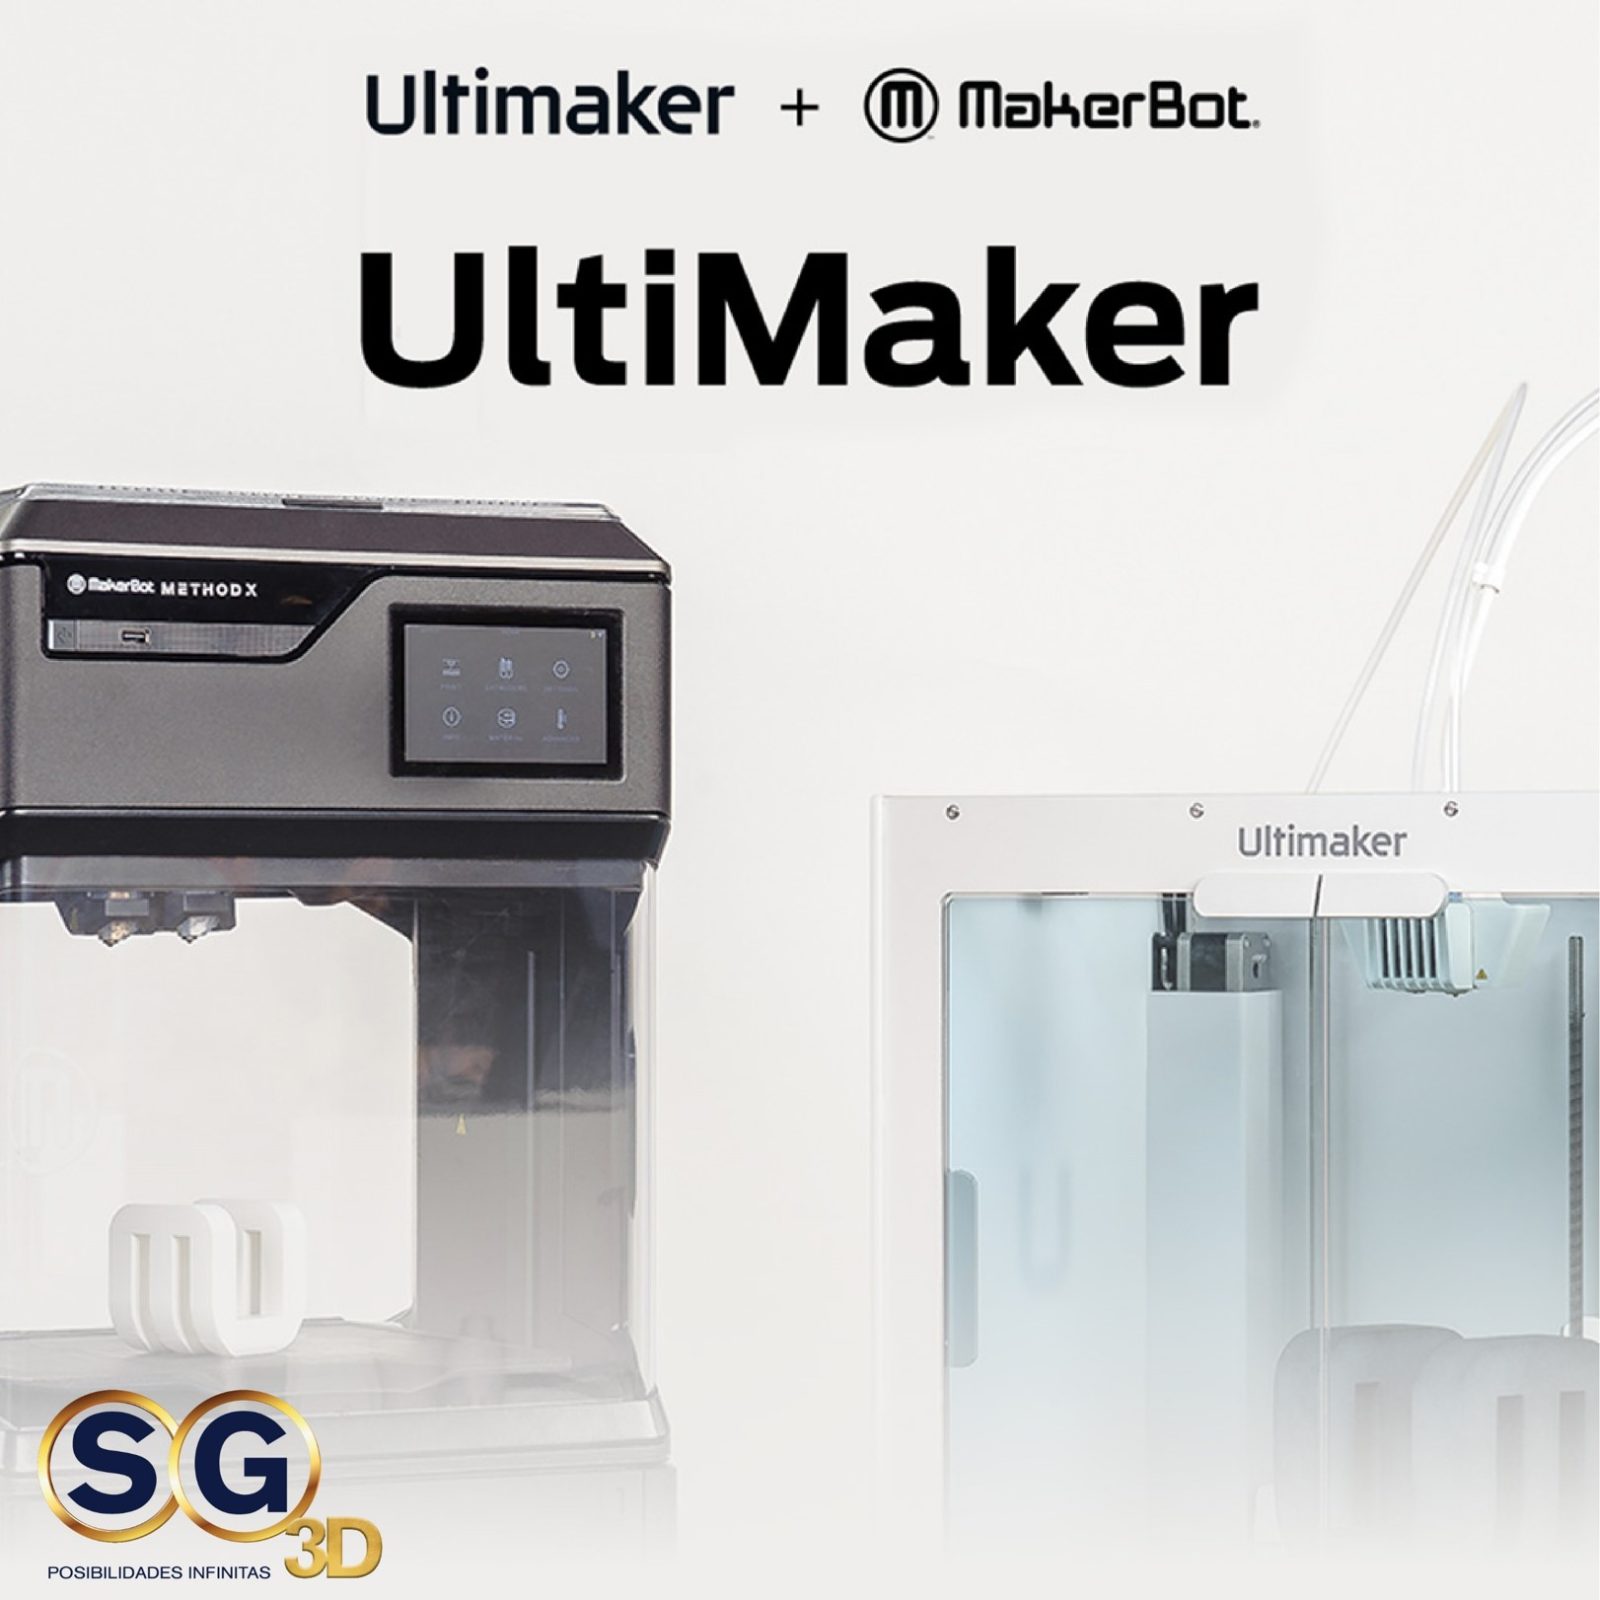 Ultimaker y Makerbot se fusionan